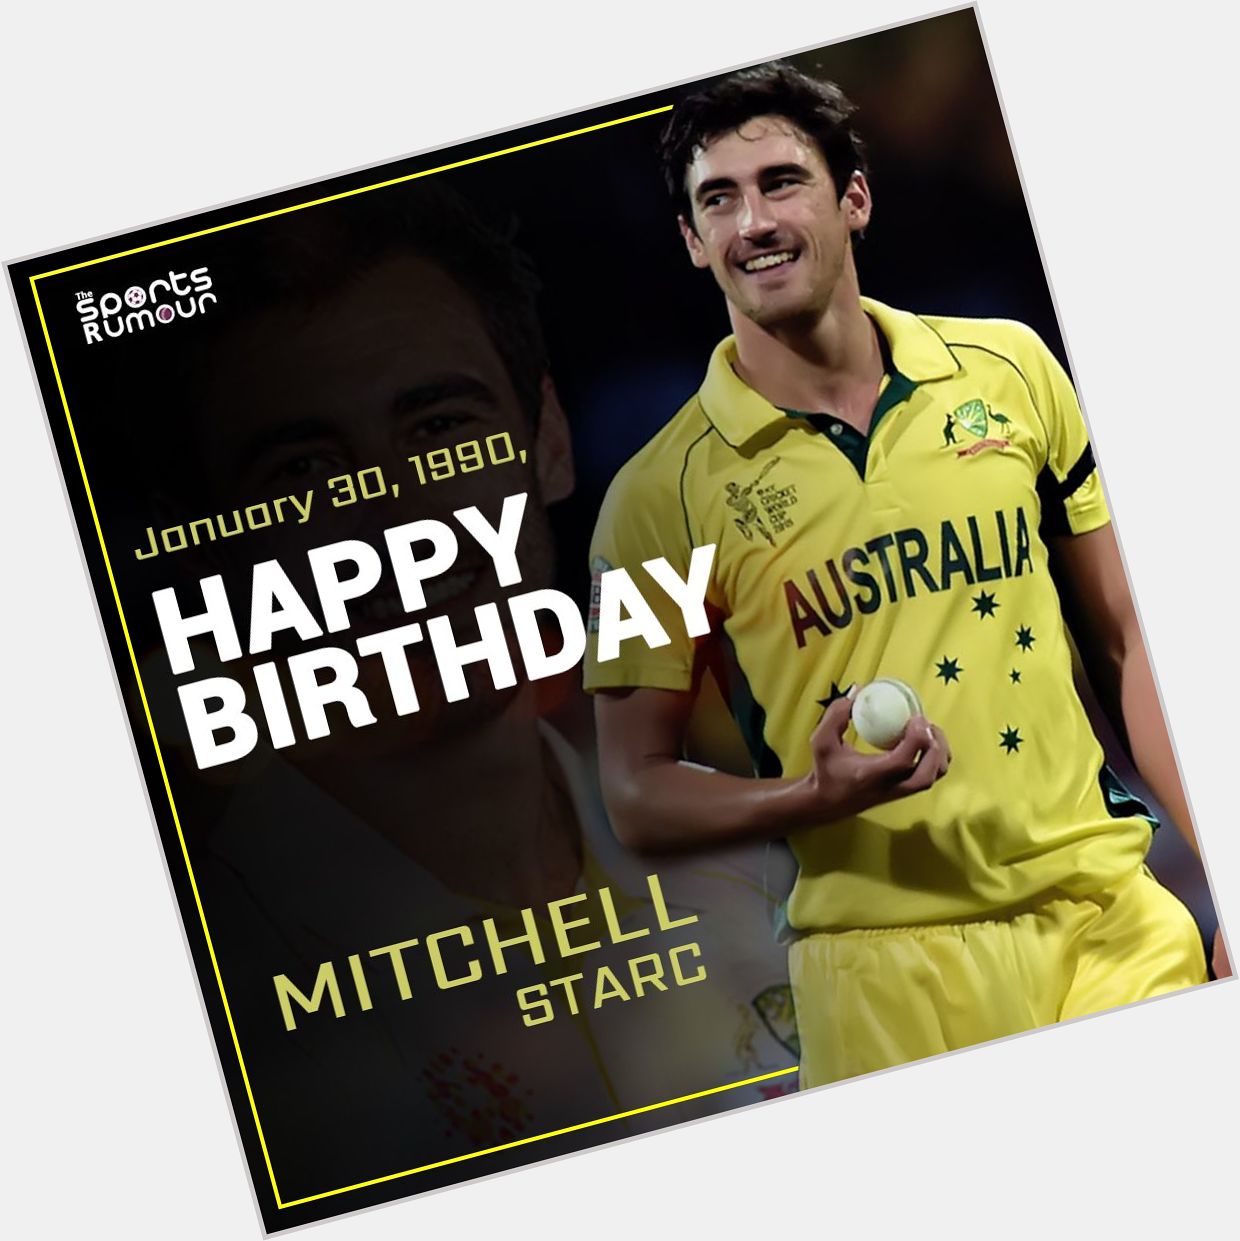 Australia s fast bowler Mitchell Starc turns 29 today. Here s wishing him a very Happy Birthday! 